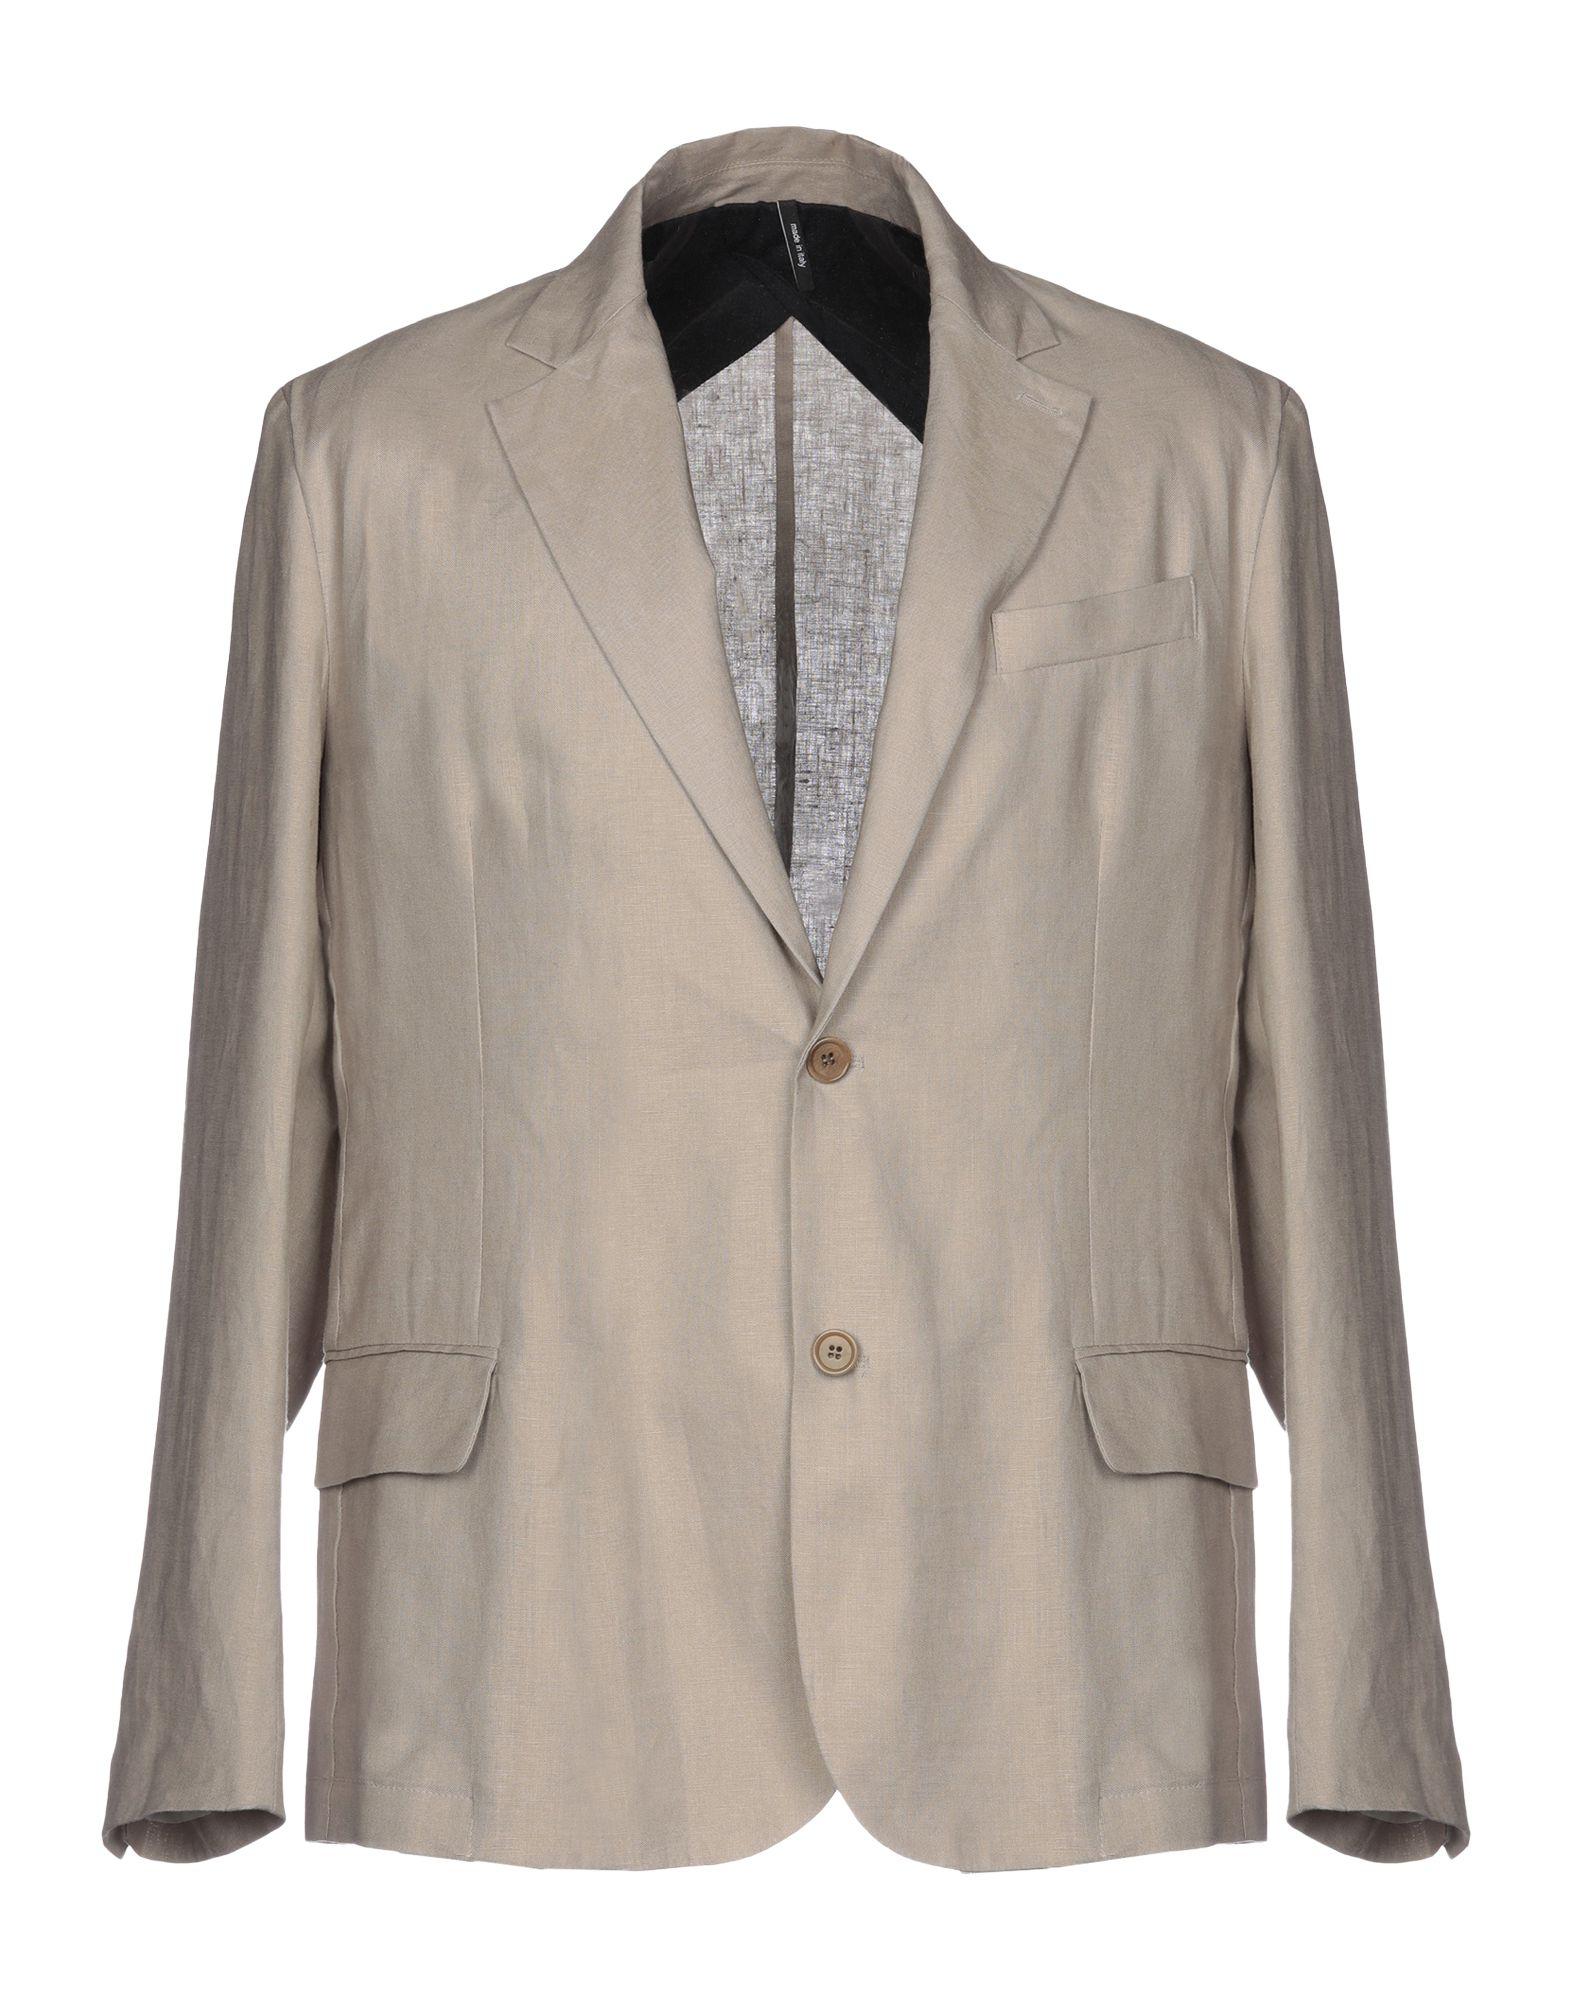 26.7 Twentysixseven Linen Blazer in Light Grey (Gray) for Men - Lyst